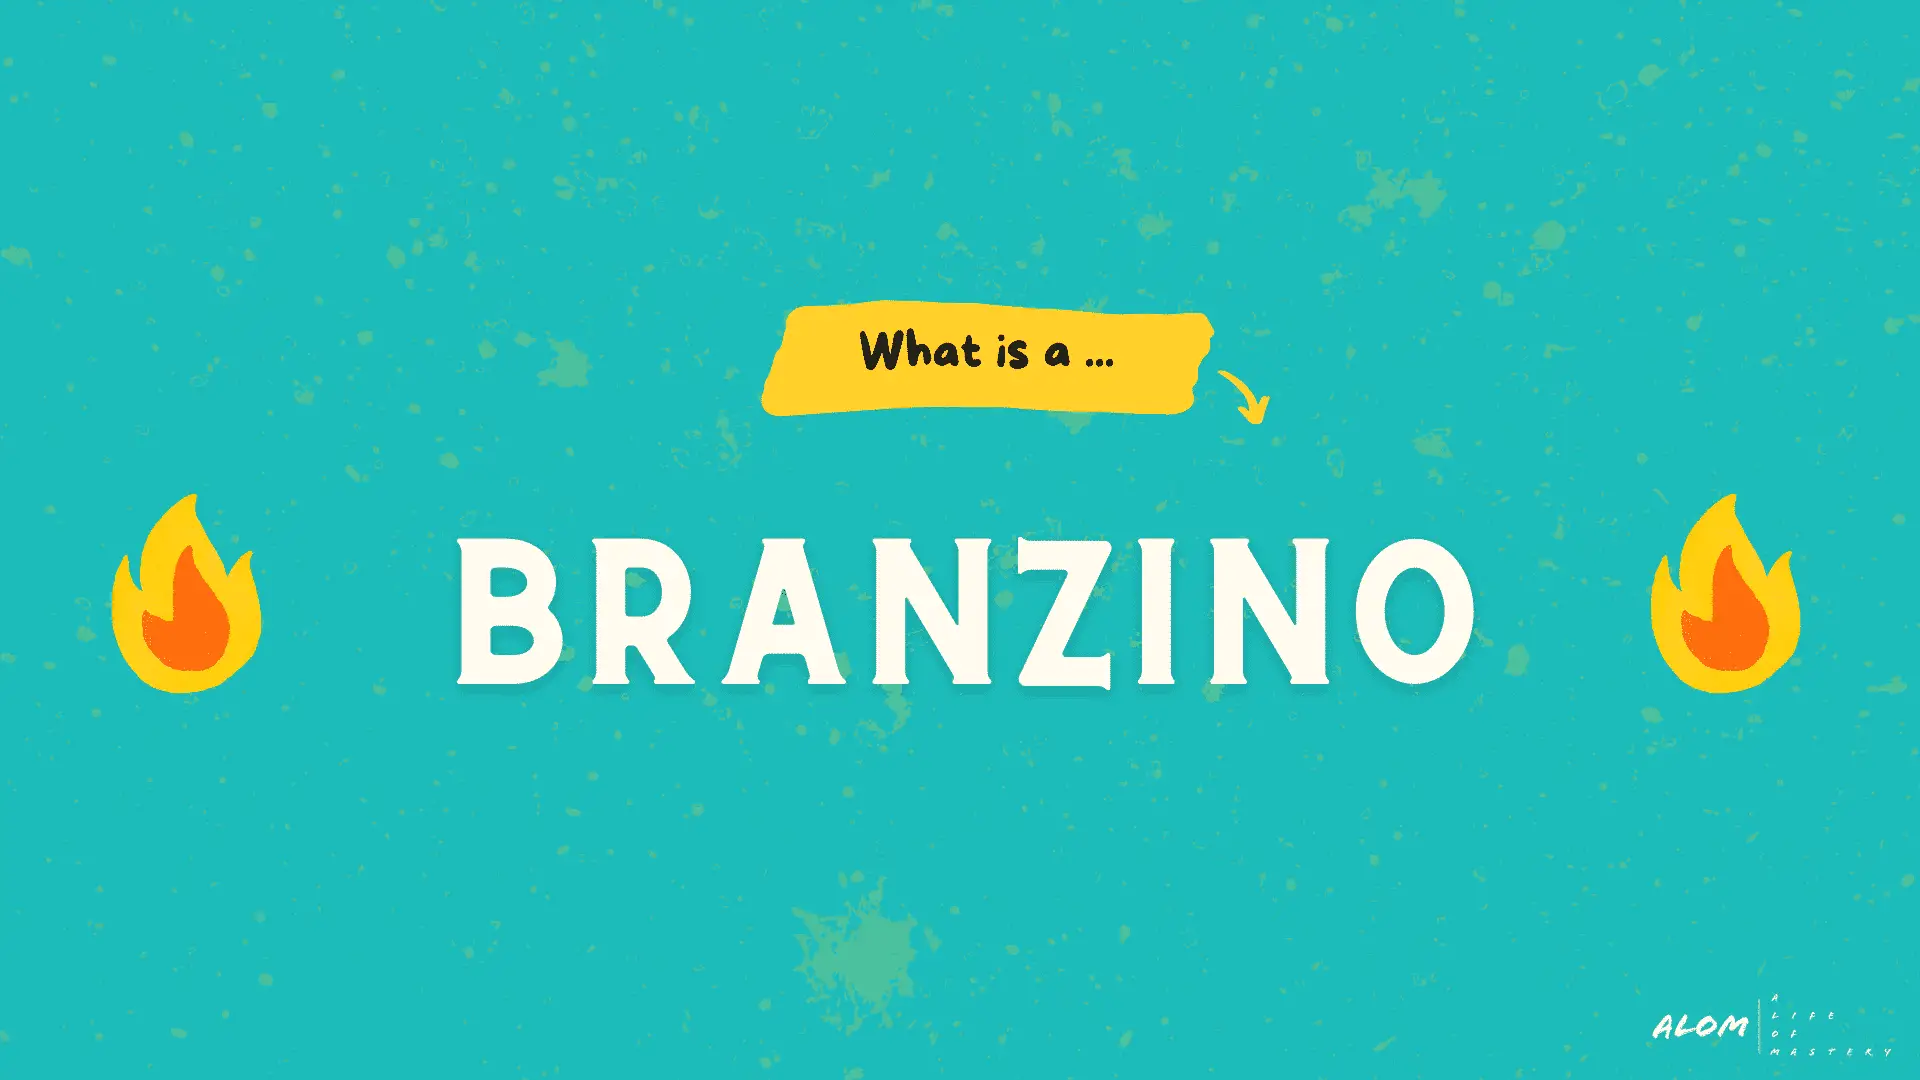 Branzino | What is it & How Do We Use It?